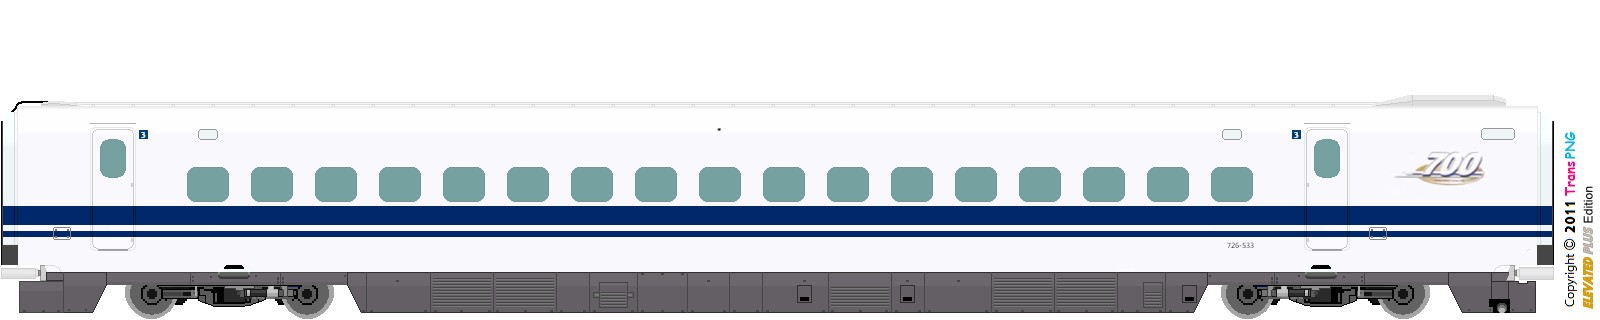 [9010] Central Japan Railway 52287586143_cbd66db0b4_o